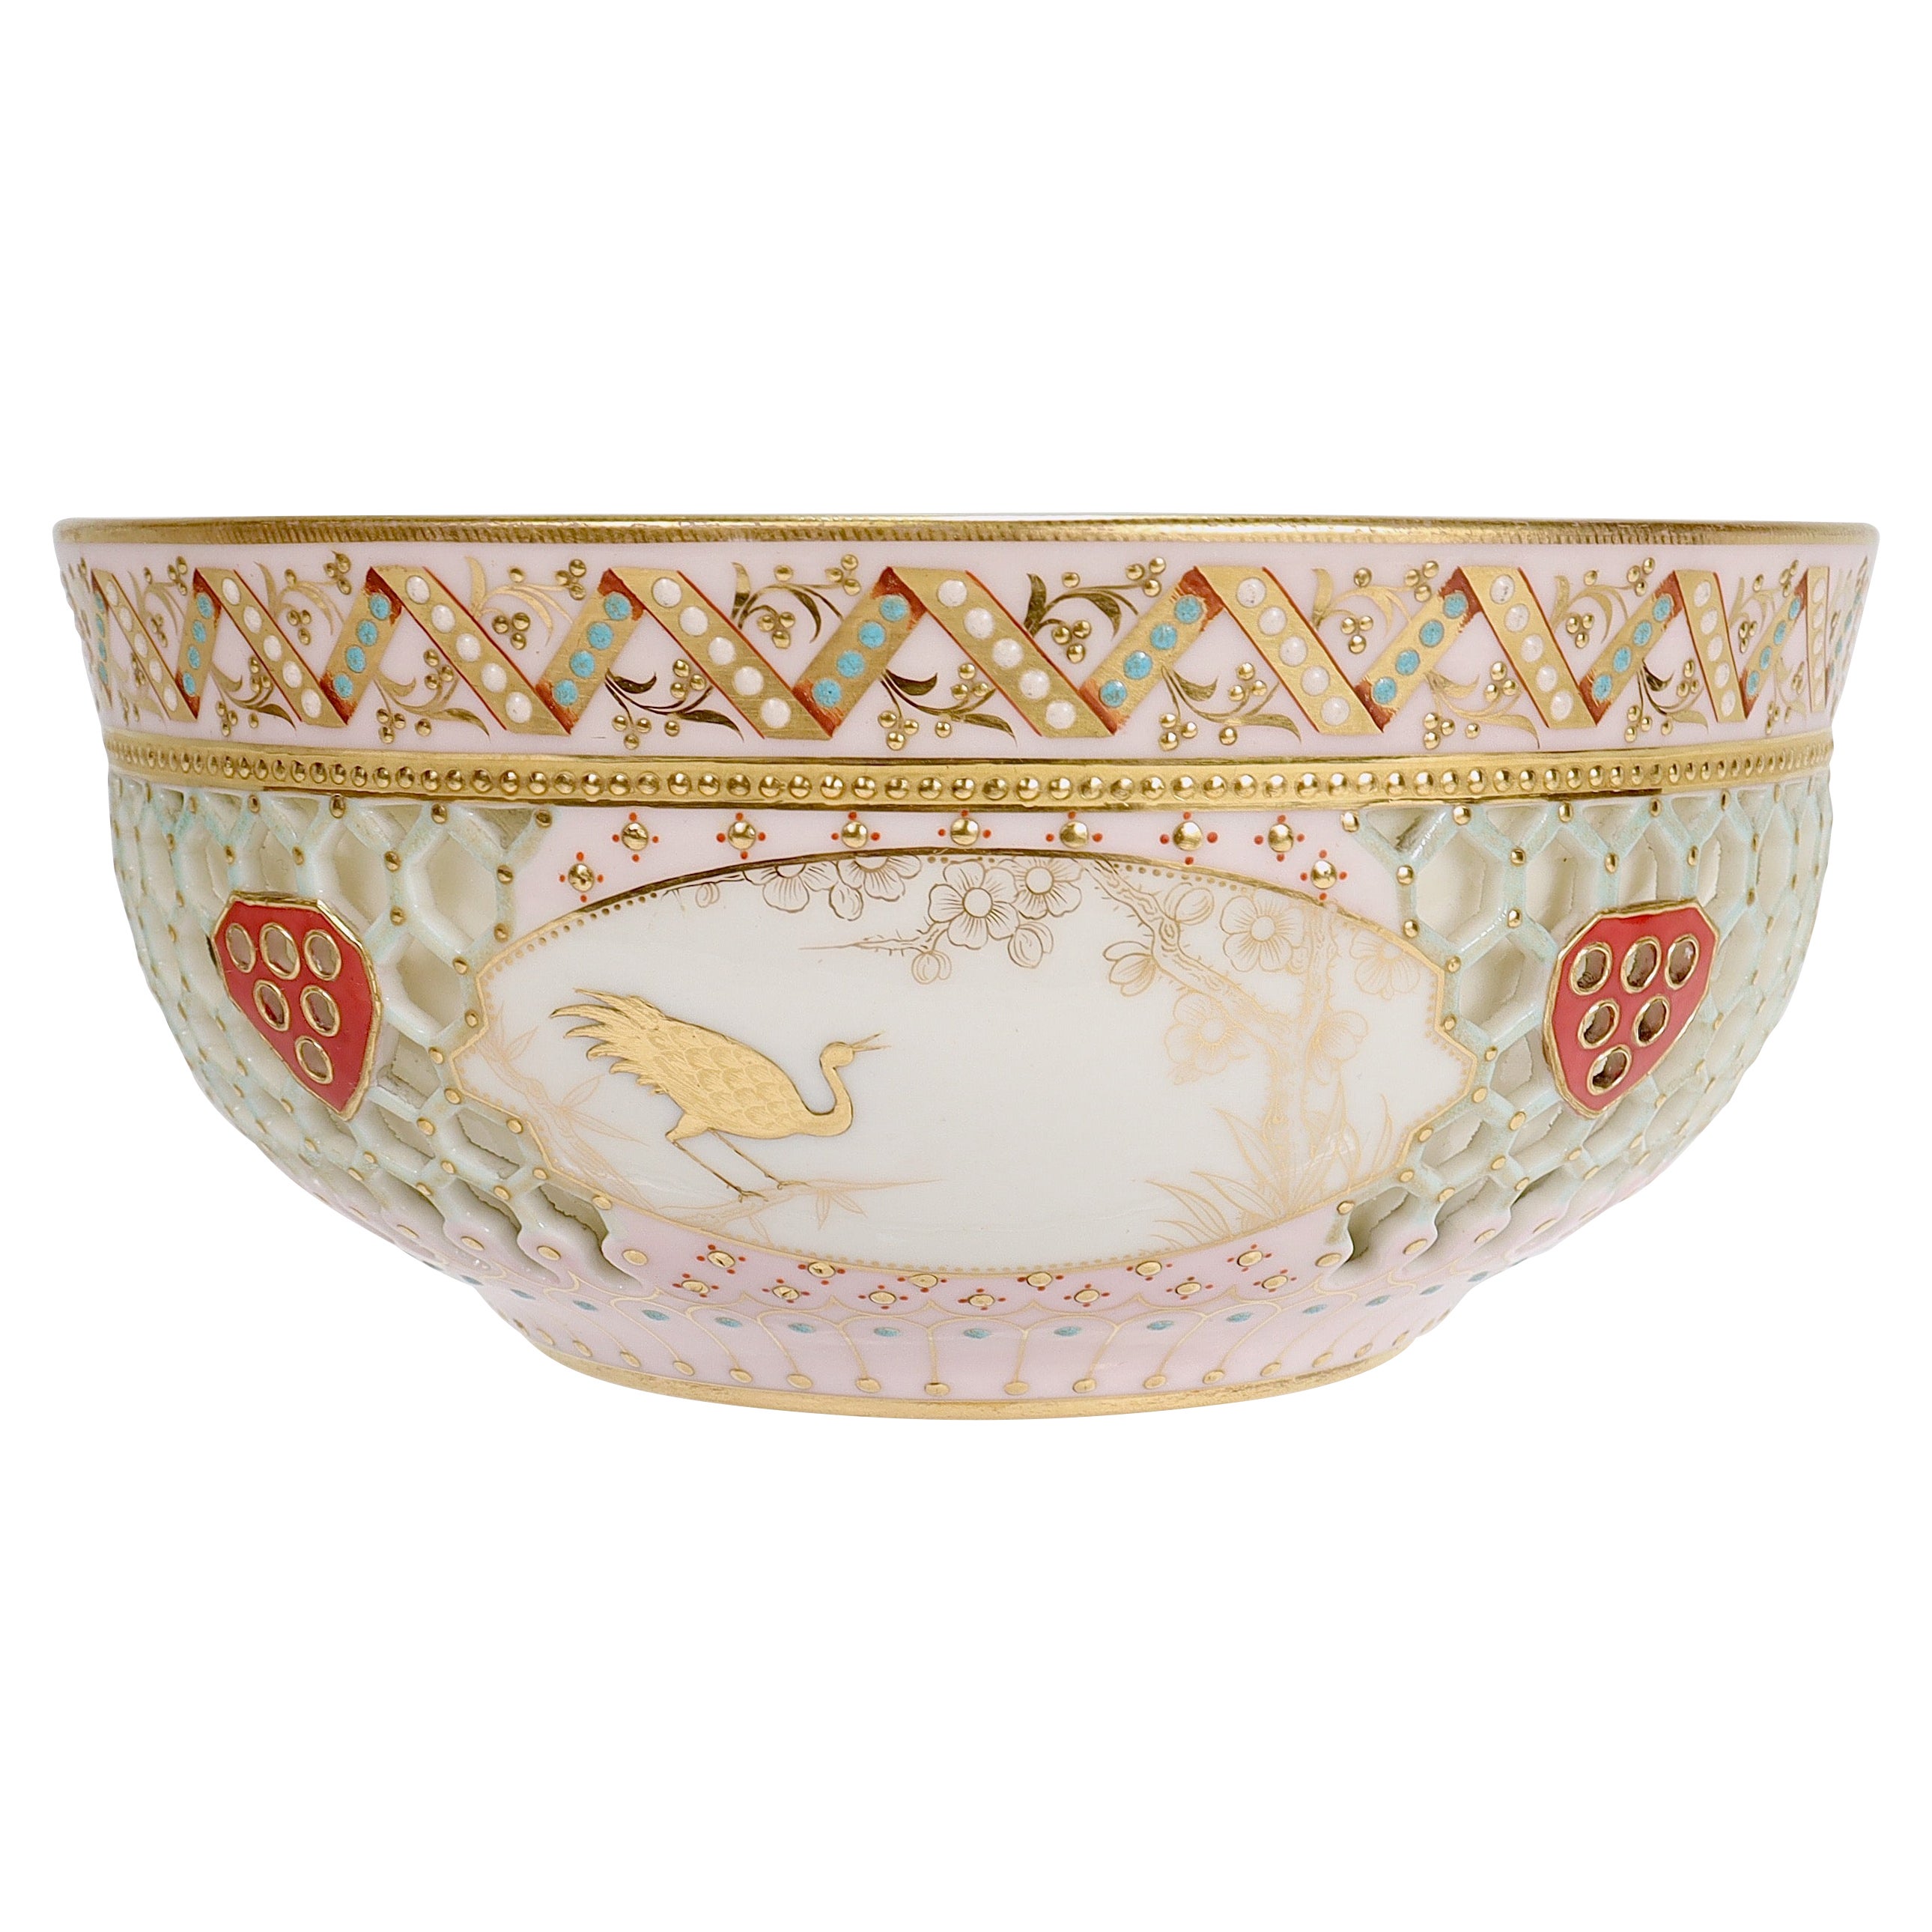 Reticulated Royal Worcester Porcelain Bowl Attr. to George Owen & Samuel Ranford For Sale